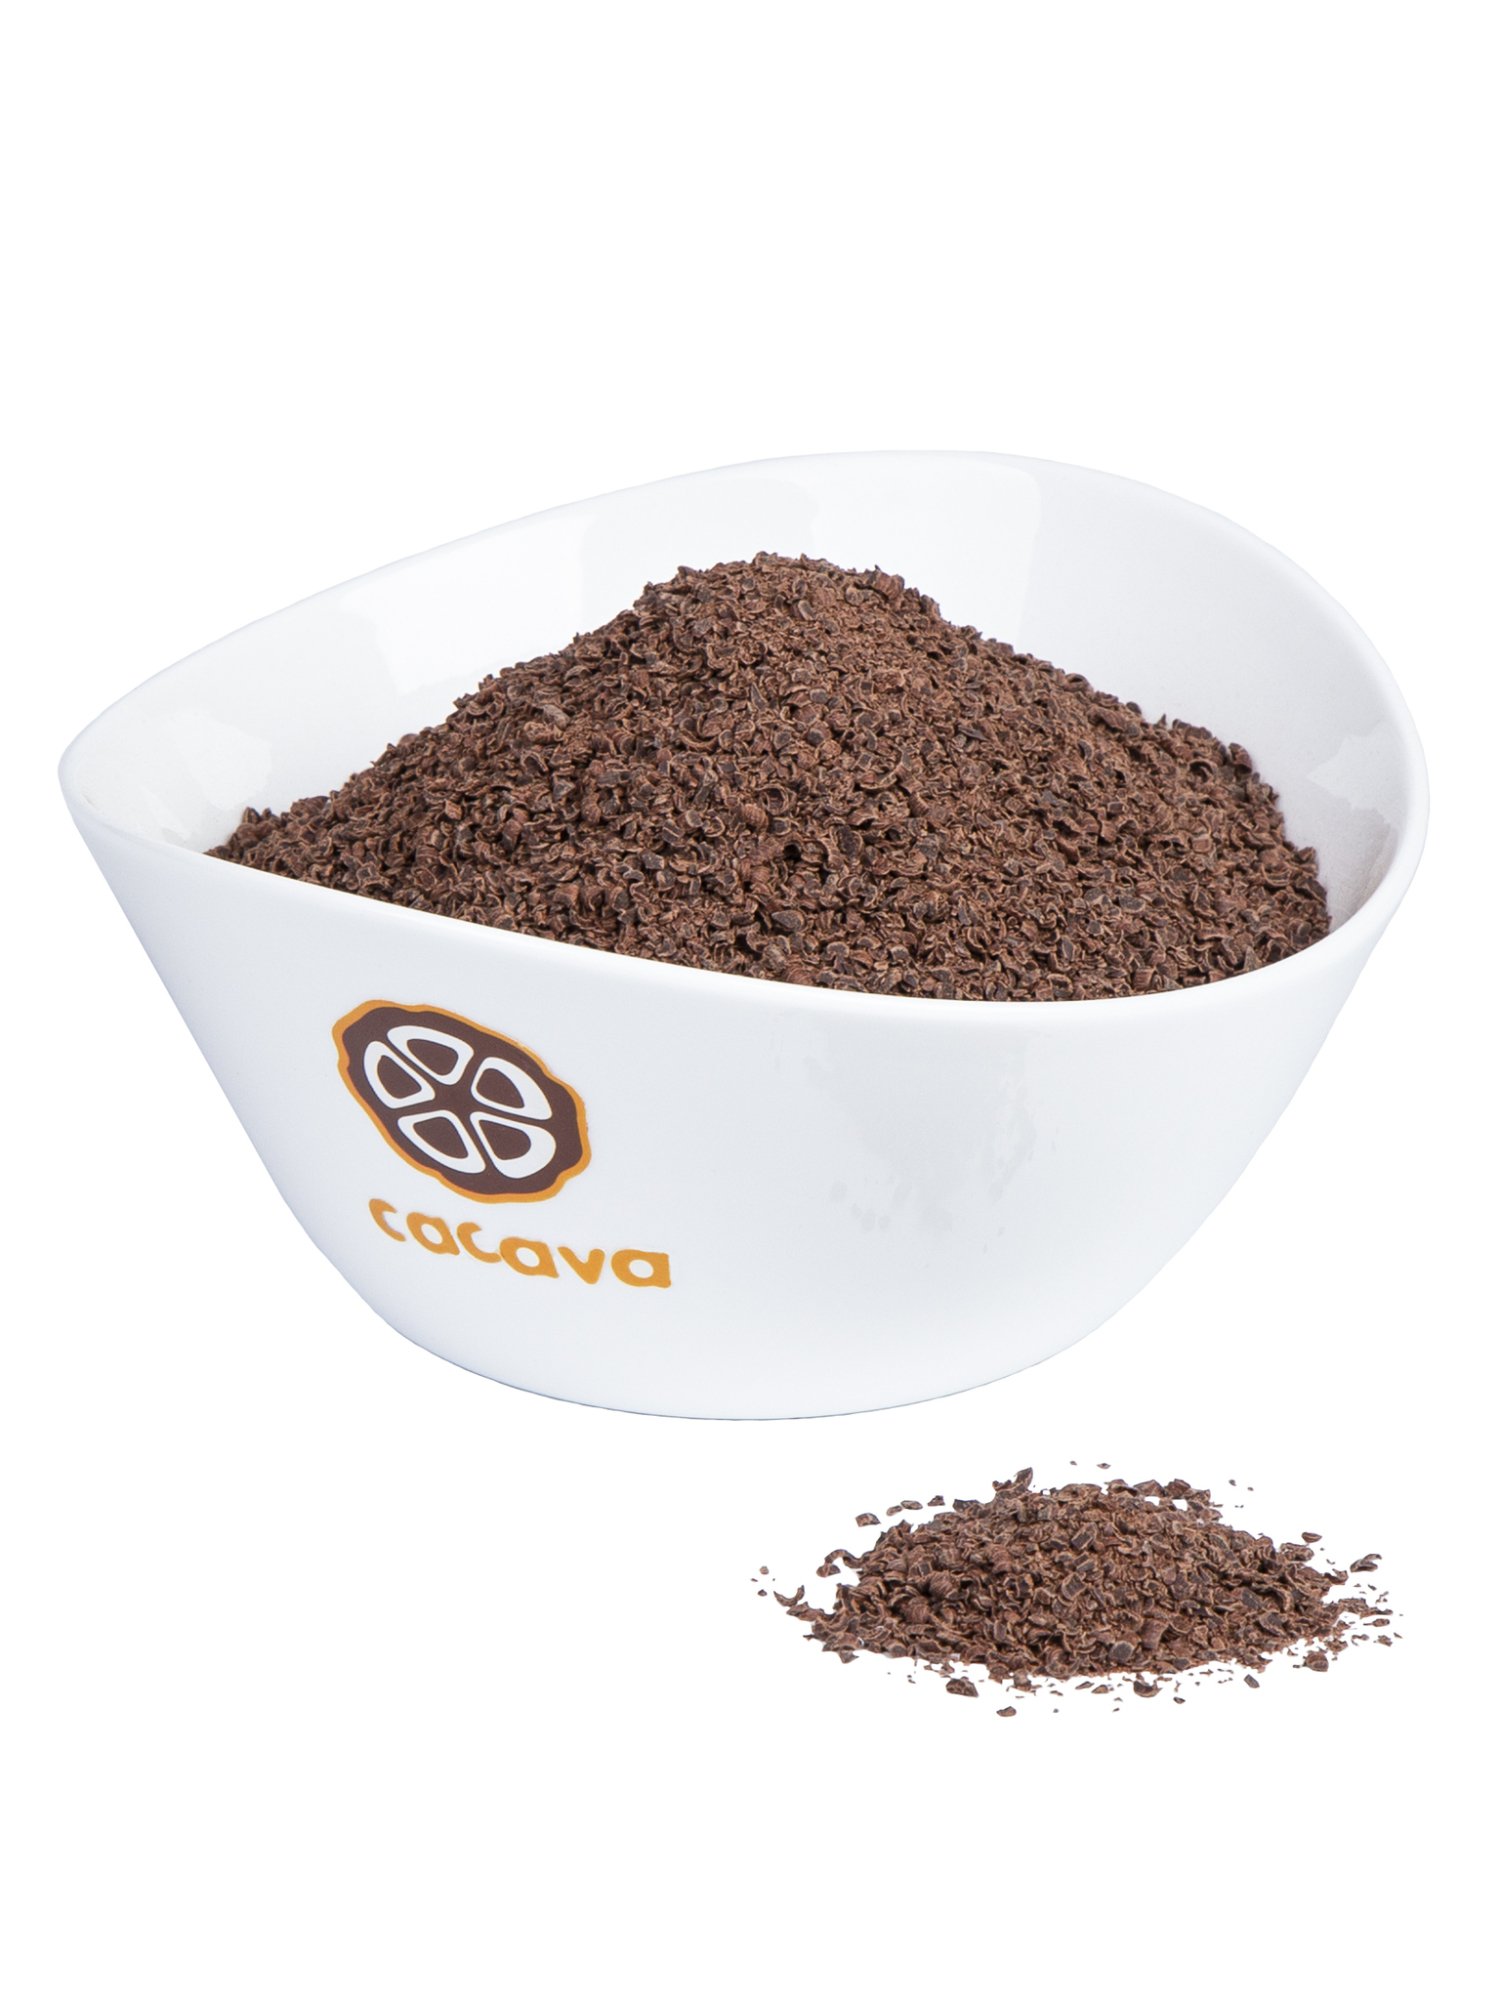 Горячий шоколад (Бразилия, Fazenda Camboa), 100% какао 100гр.